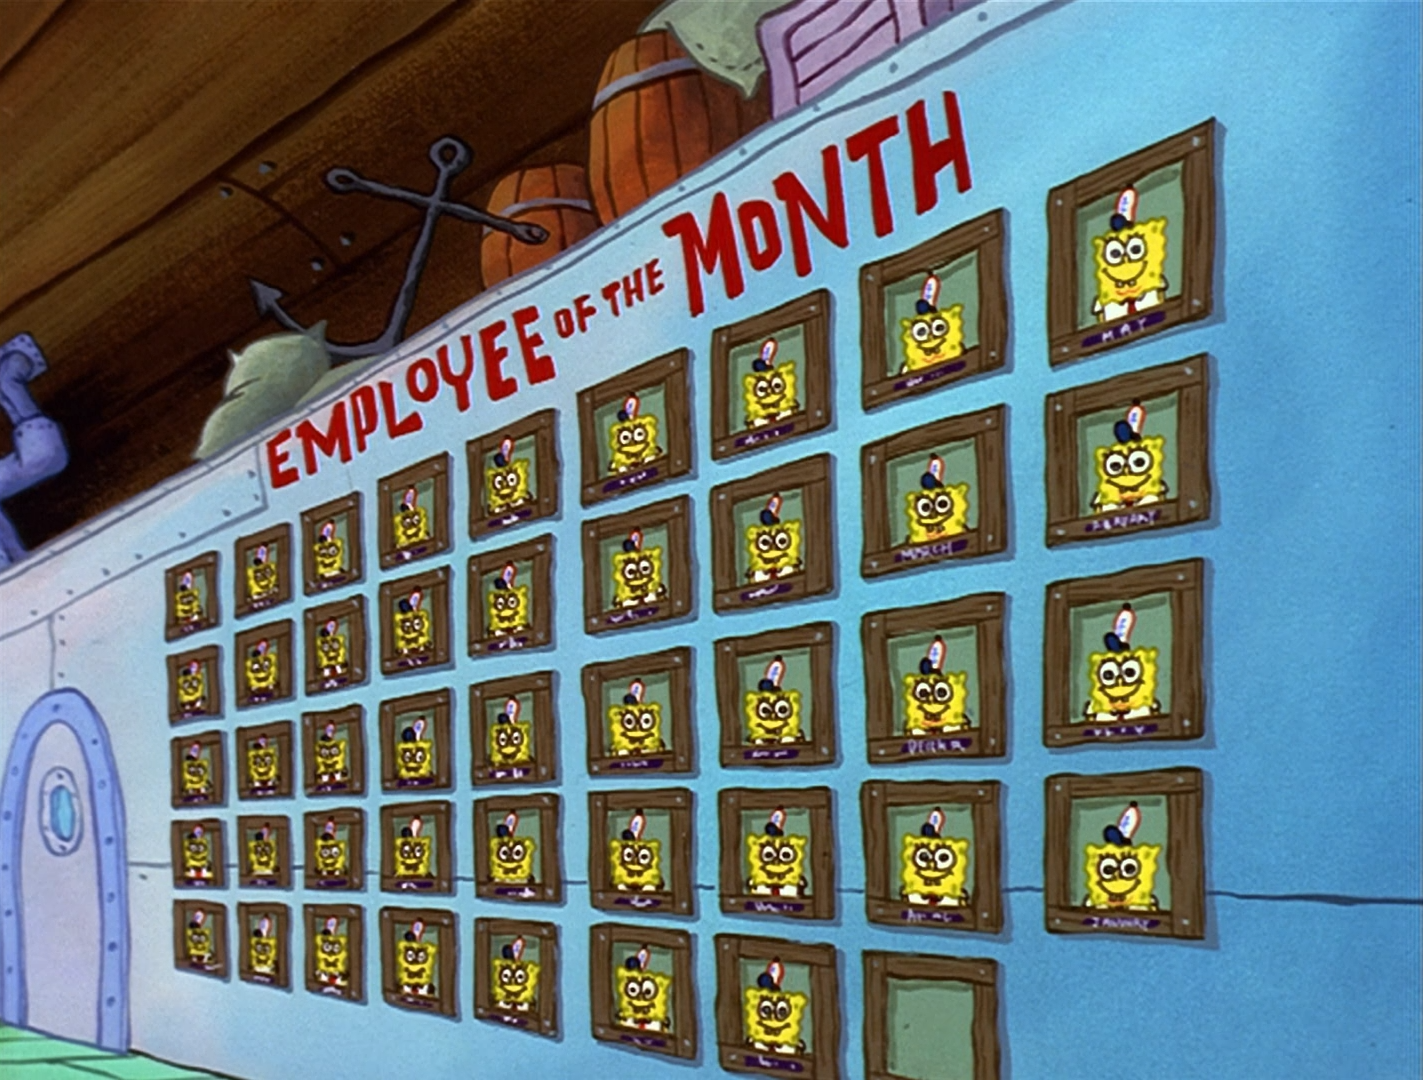 spongebob squarepants employee of the month game reviewa